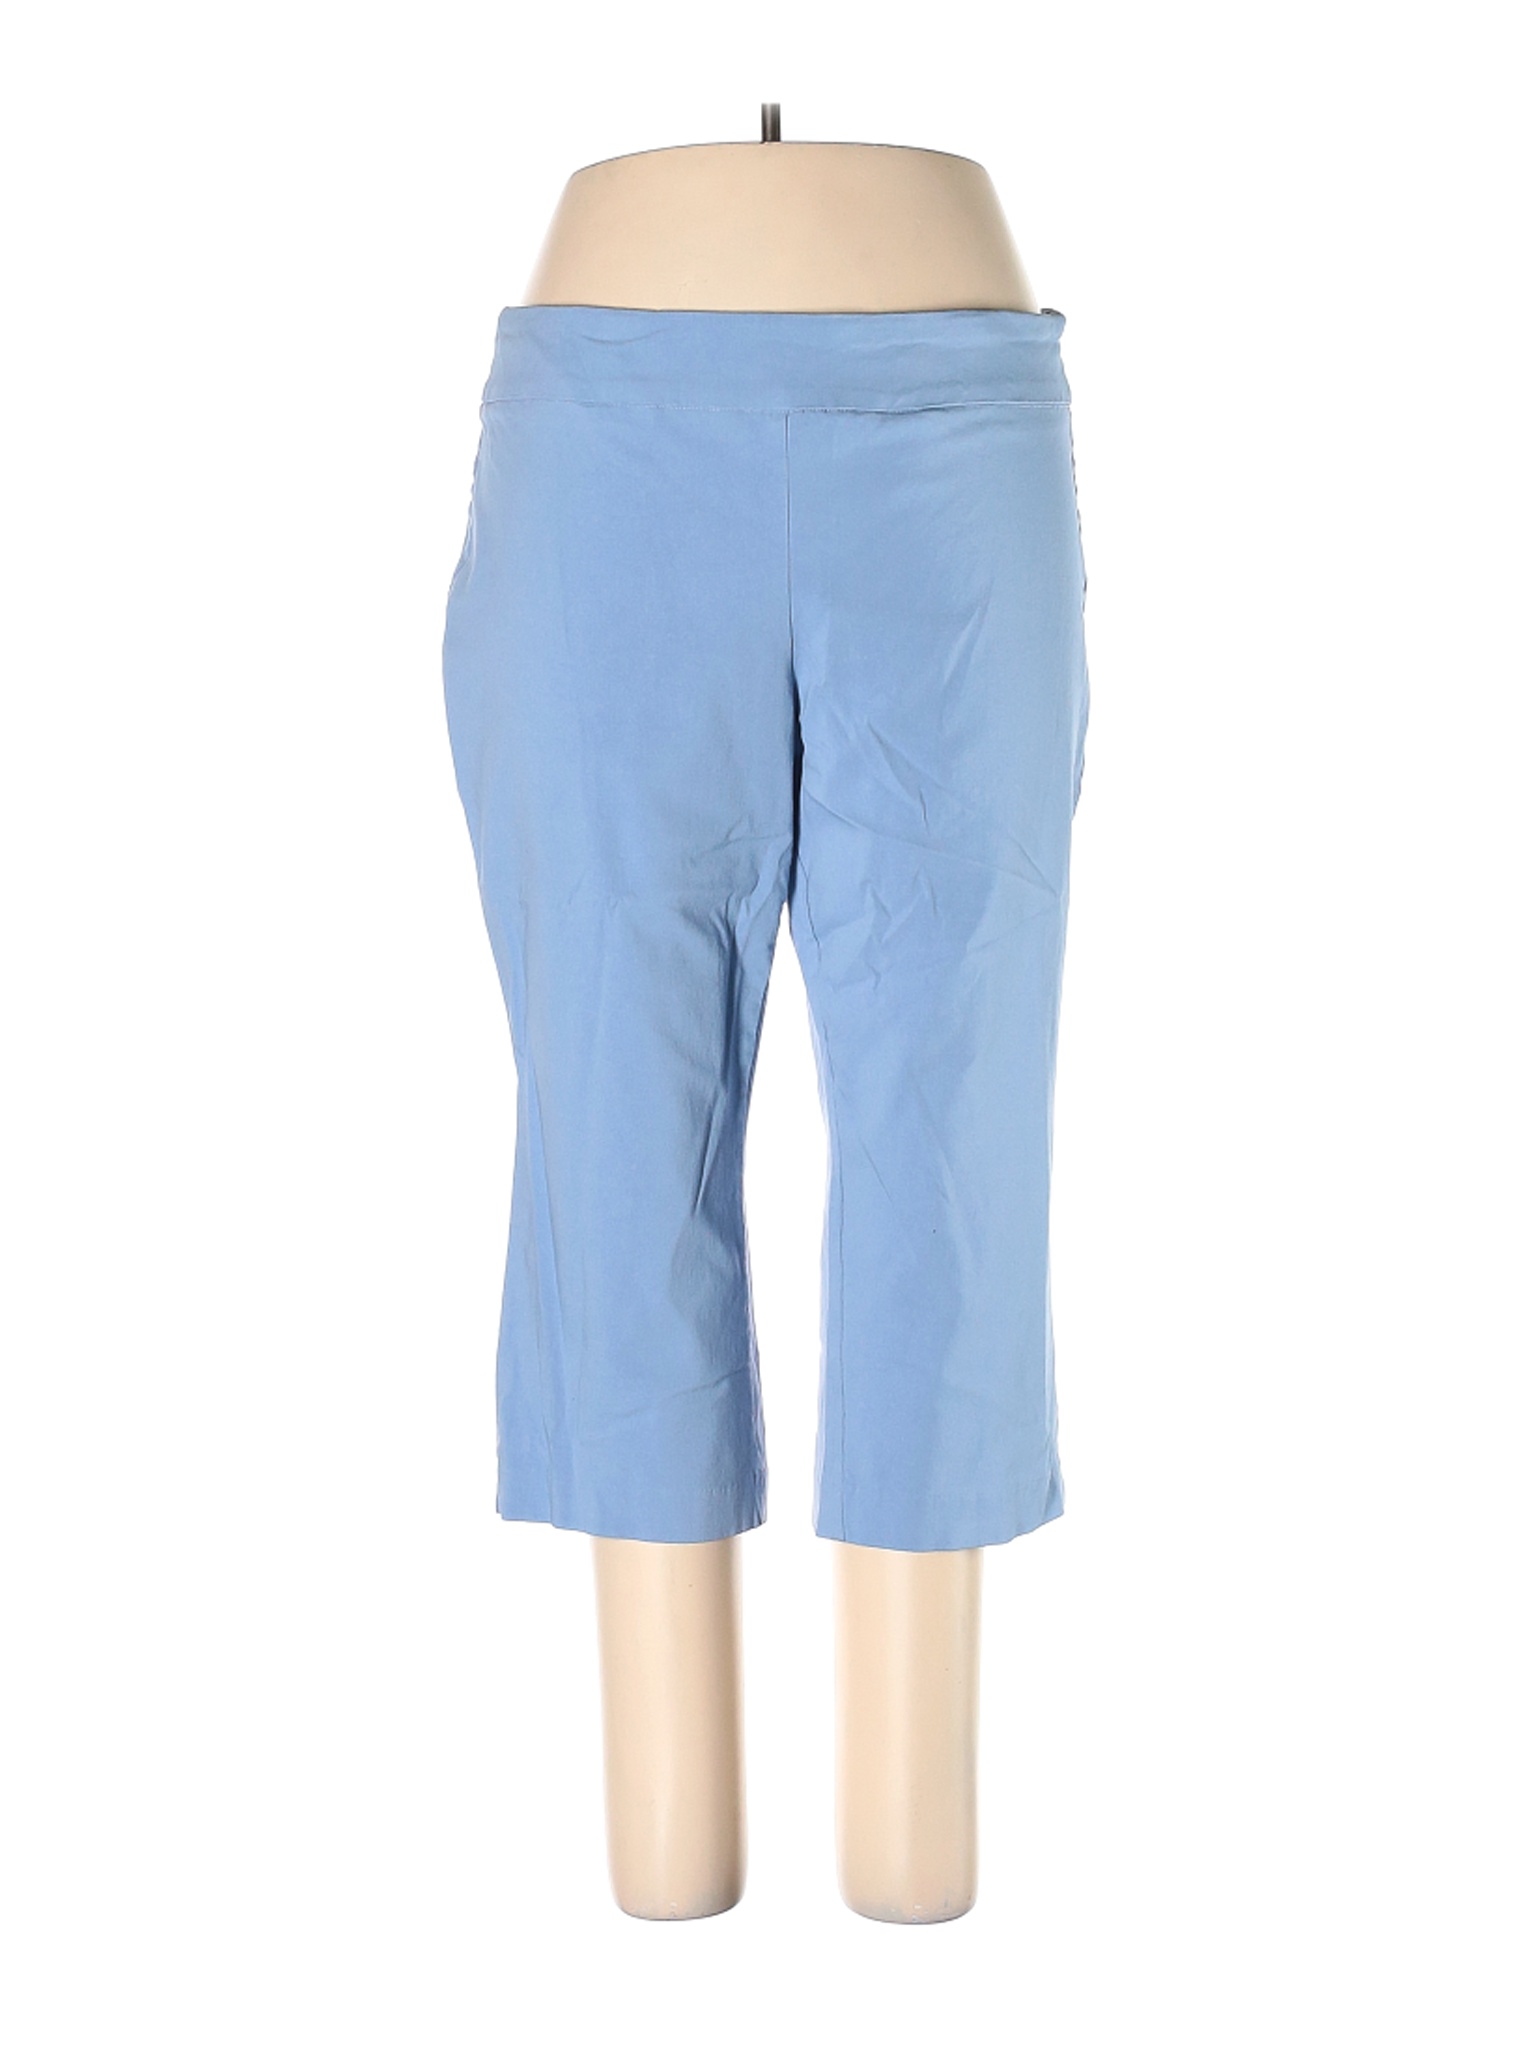 Dana Buchman Women Blue Dress Pants XL | eBay